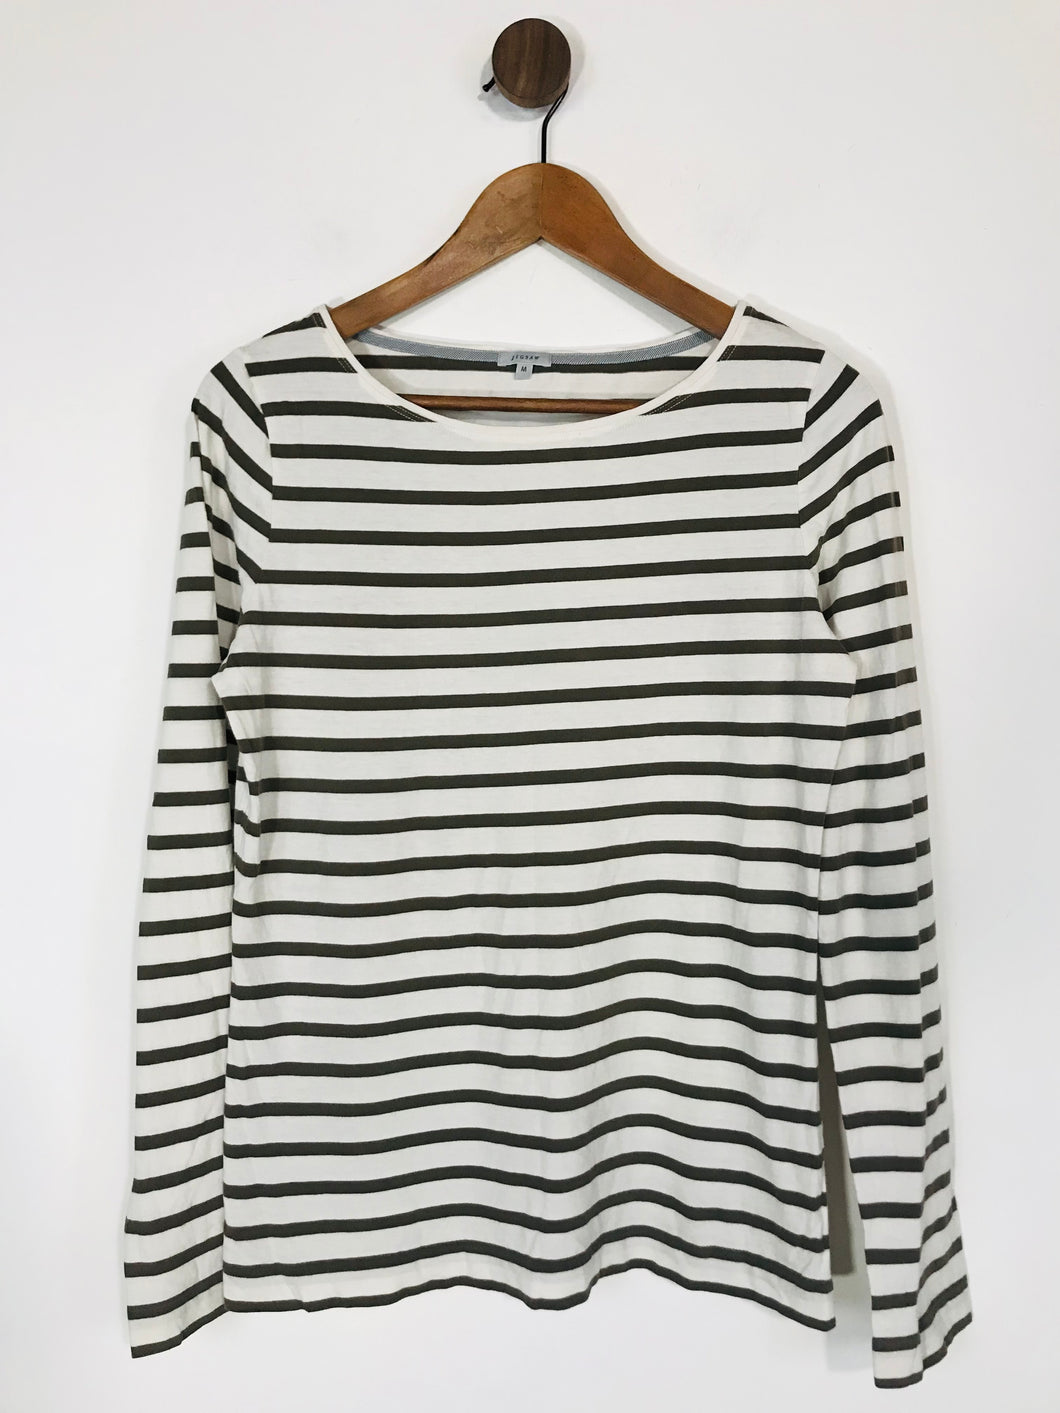 Jigsaw Women's Striped Long Sleeve T-Shirt | M UK10-12 | White